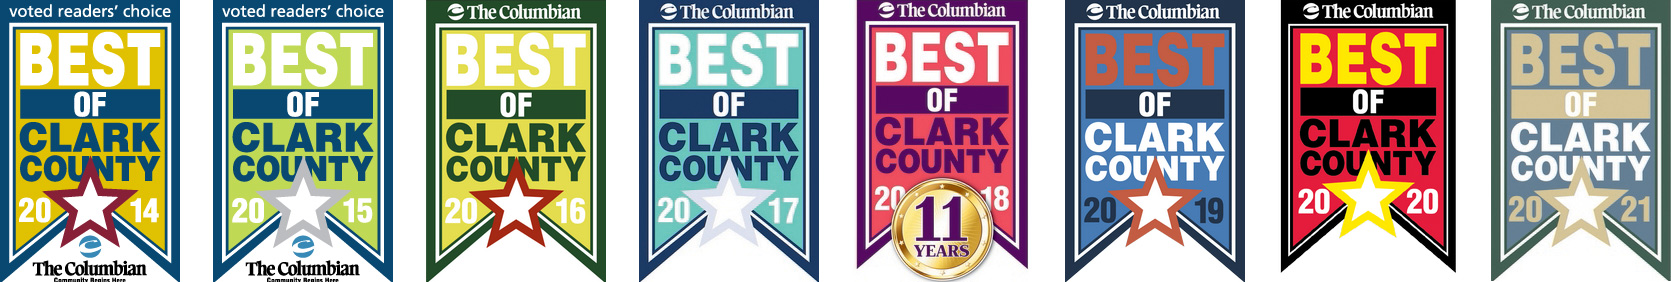 Best of Clark County Graphic 2014-2021